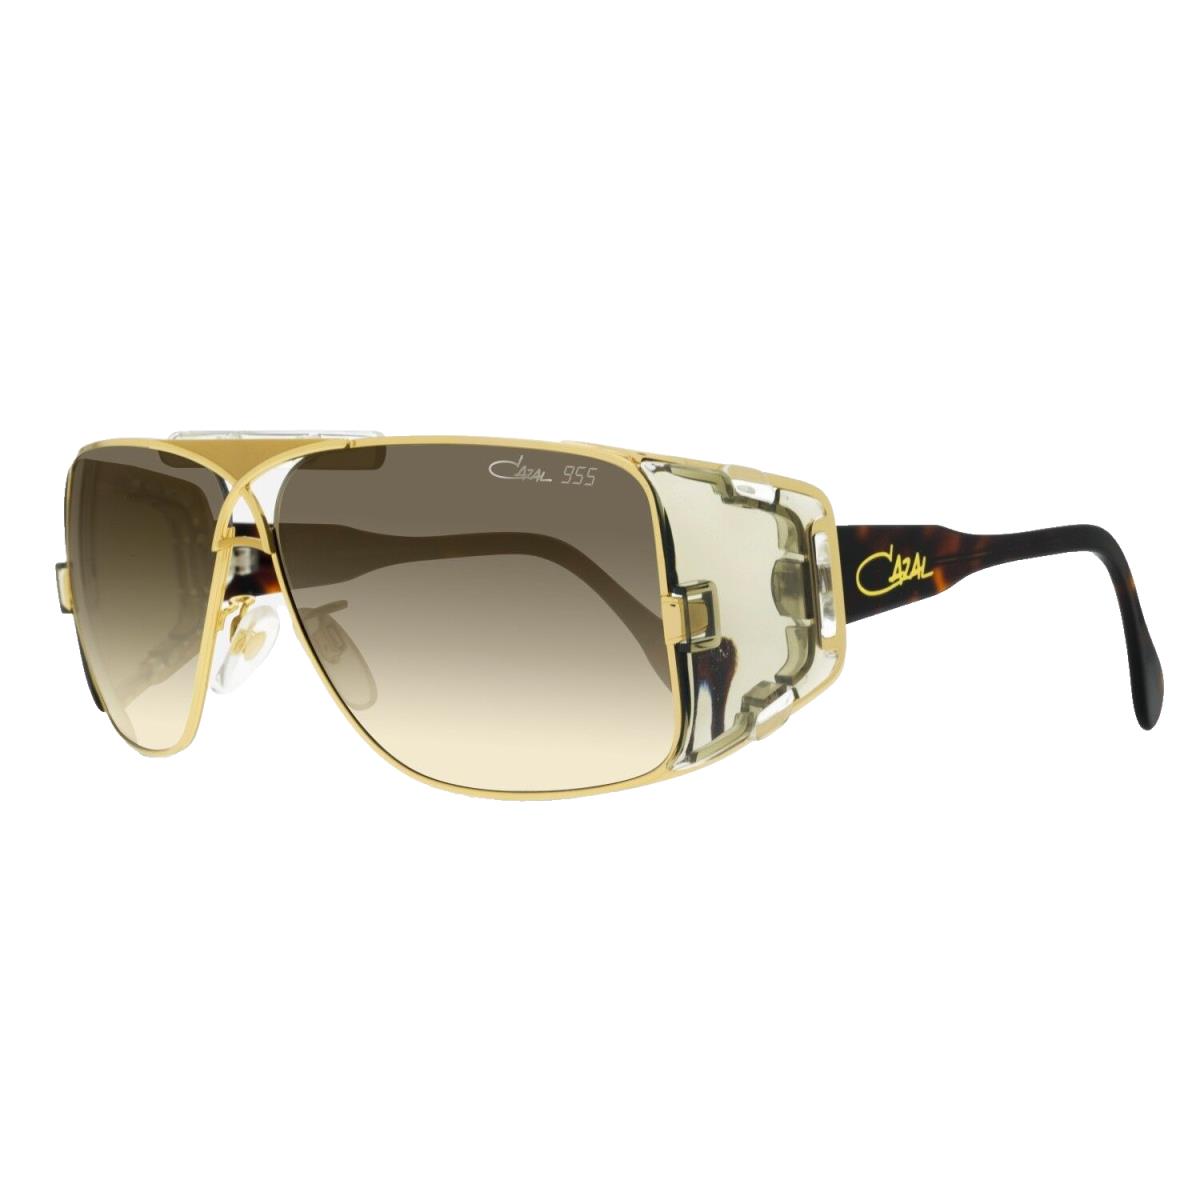 Cazal Legends 955 Gold Havana/brown Shaded 097 Sunglasses - Frame: Gold Havana, Lens: Brown Shaded